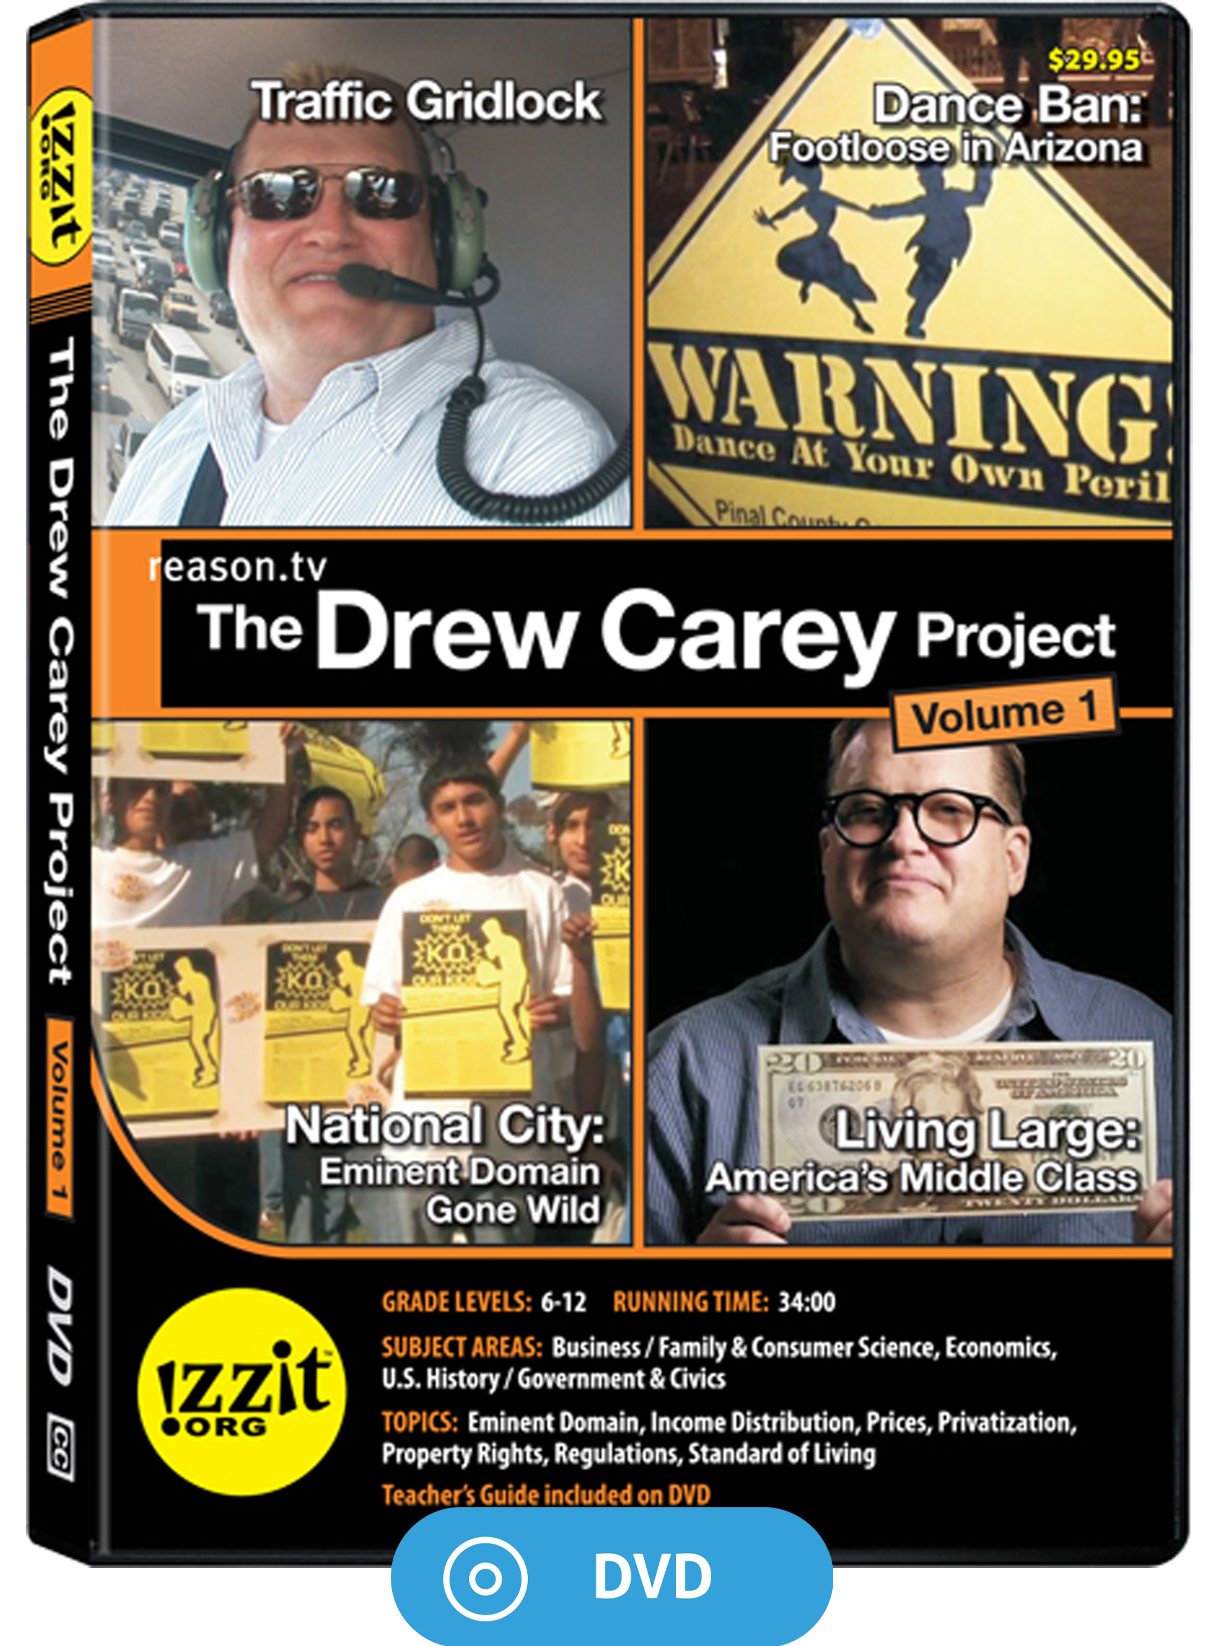 The Drew Carey Project Volume 1 DVD